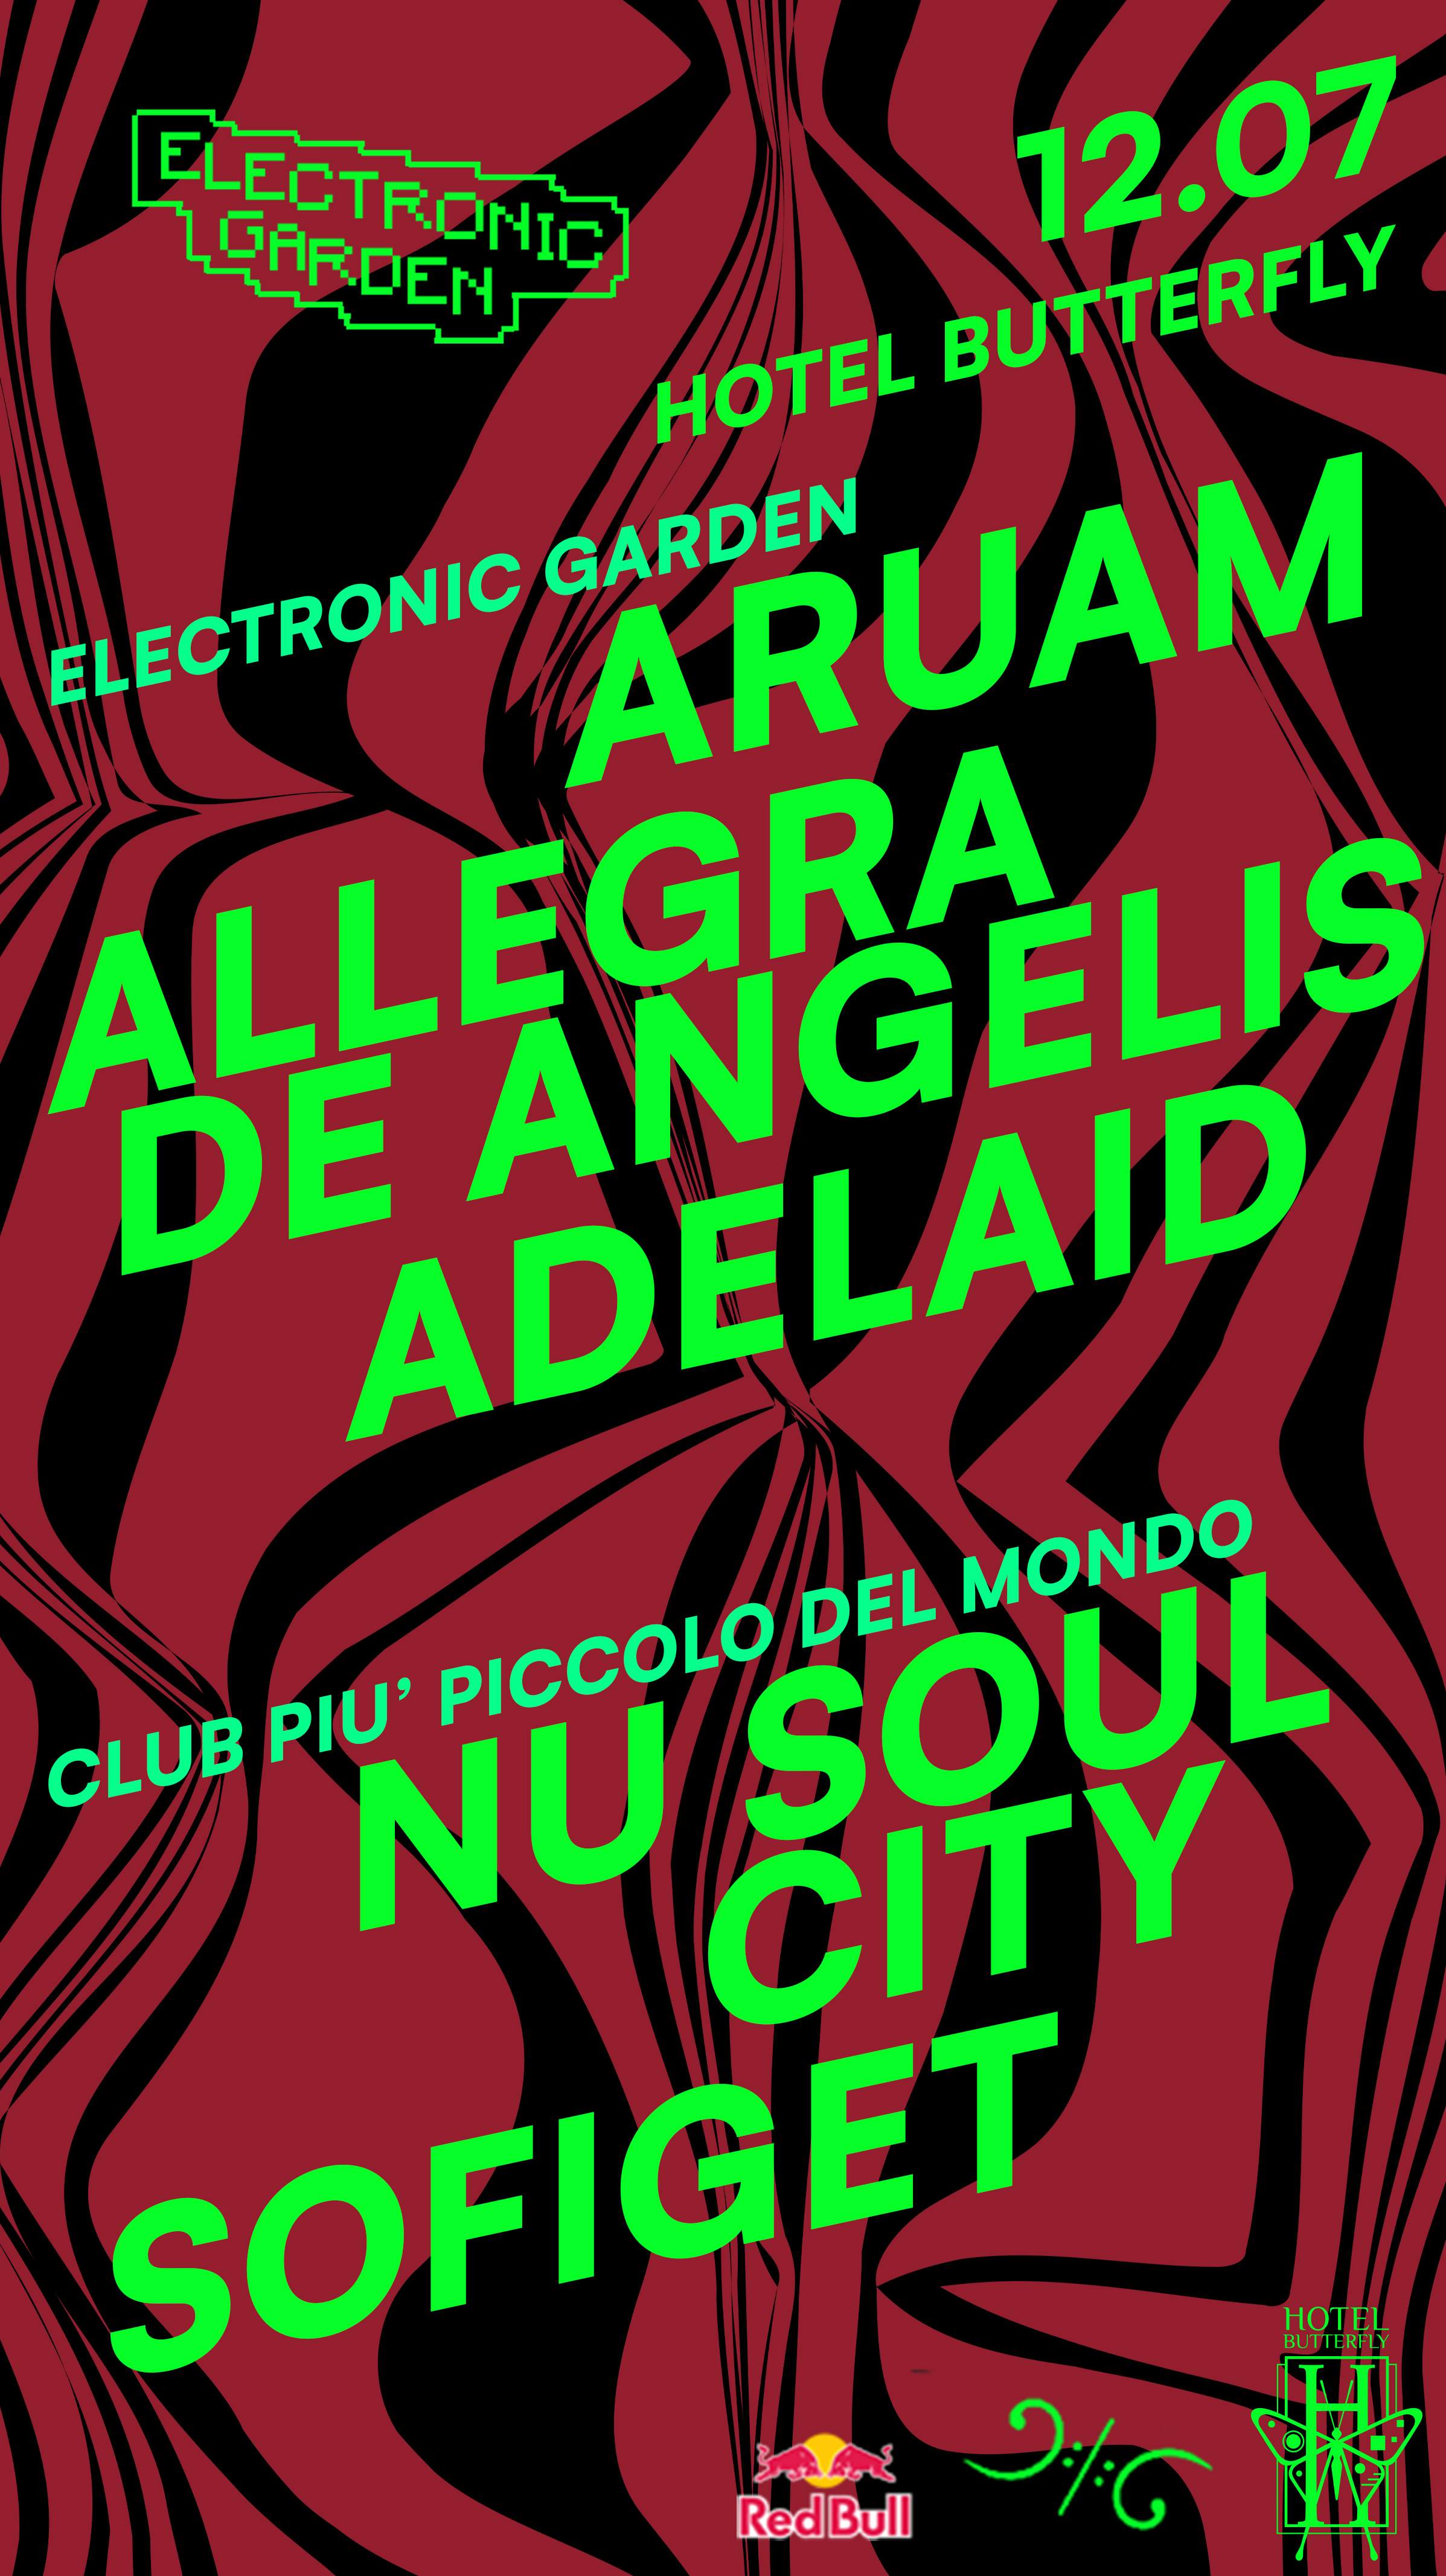 Electronic Garden: Aruam, Allegra De Angelis, Adelaid, Sofiget, Nu Soul City - フライヤー表